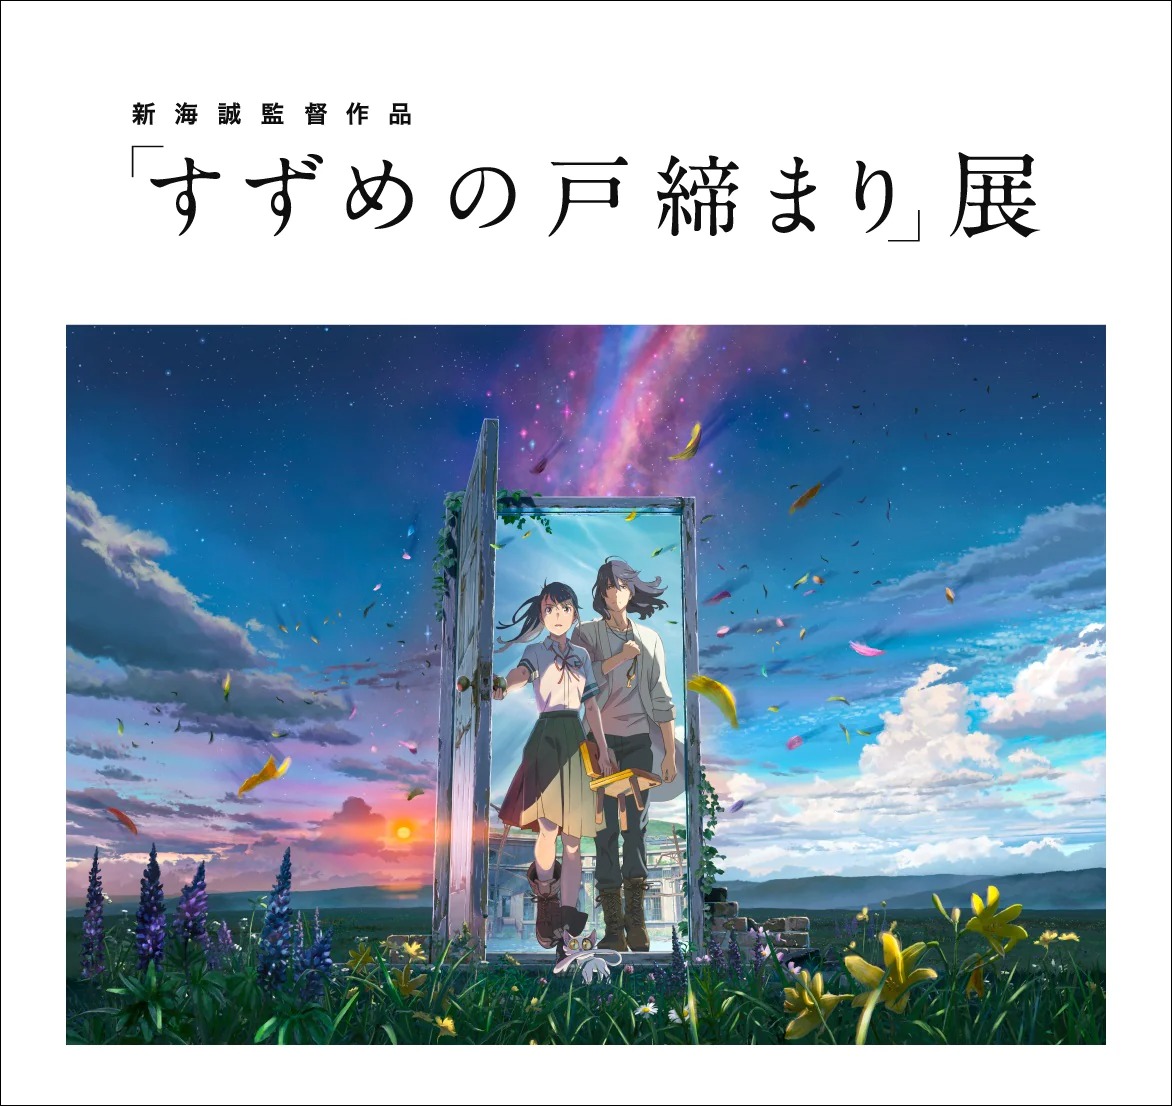 Makoto Shinkai’s ‘Suzume’ exhibition